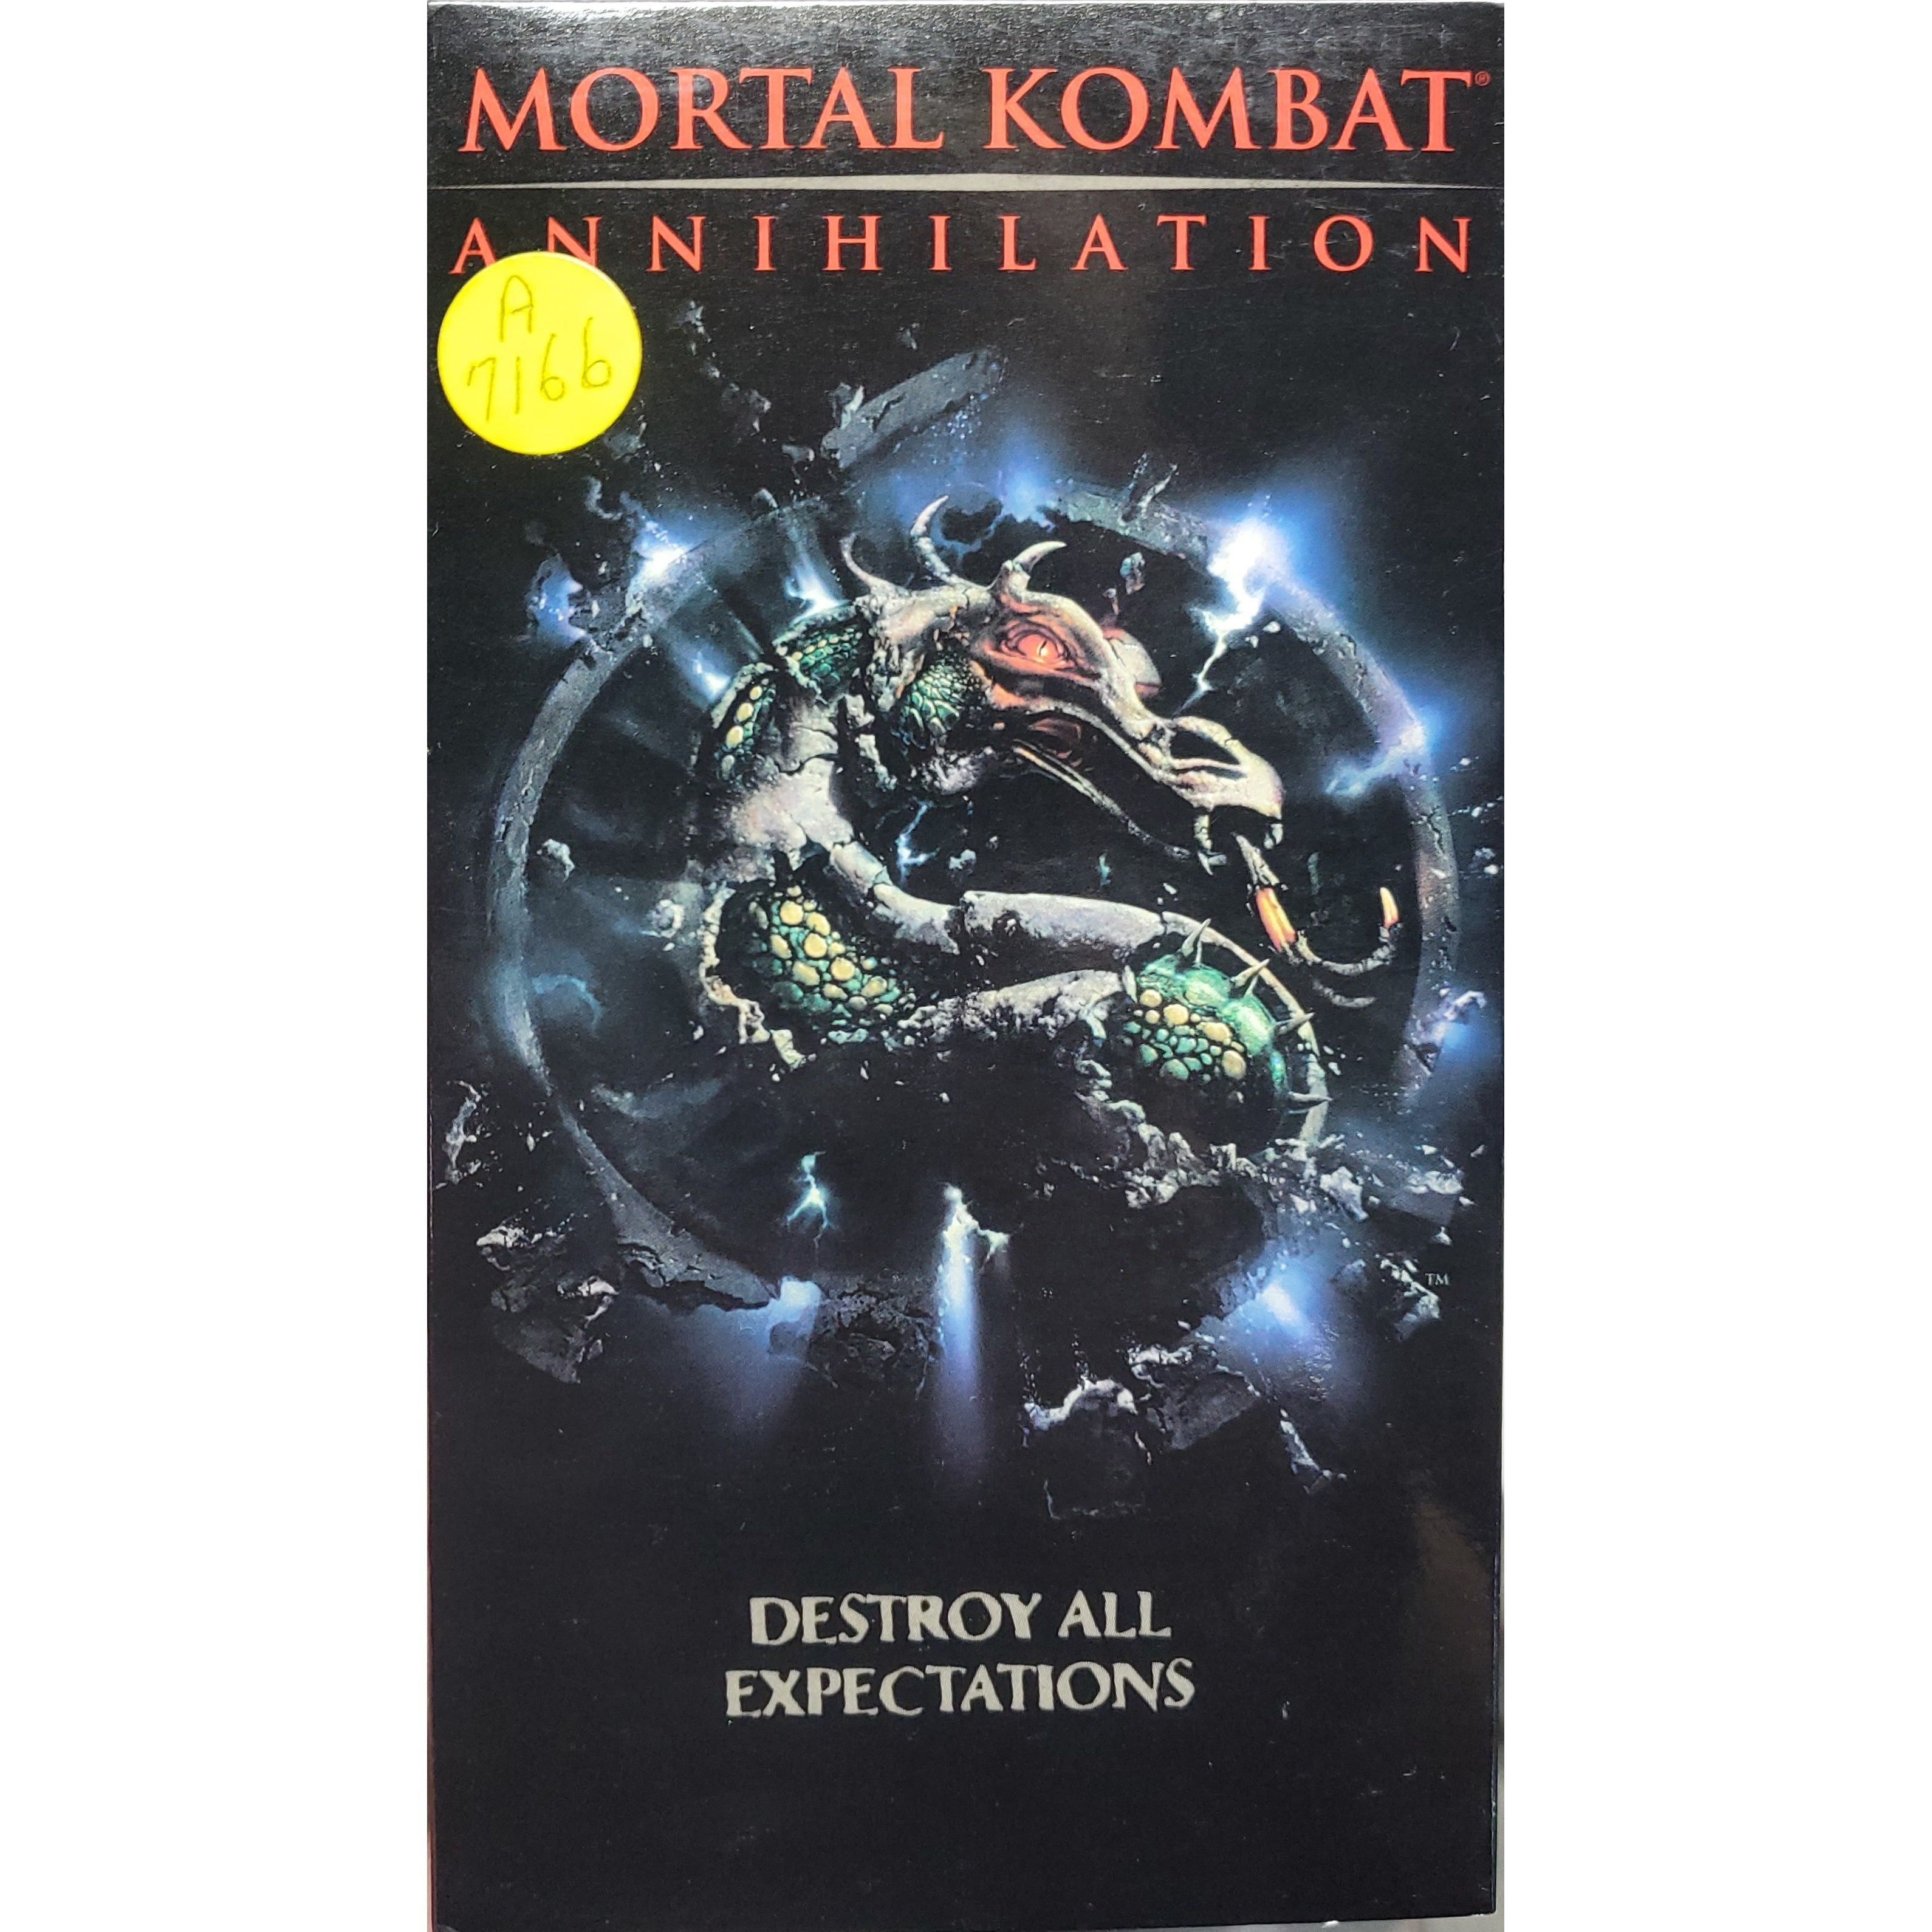 Cassette VHS Mortal Kombat Annihilation